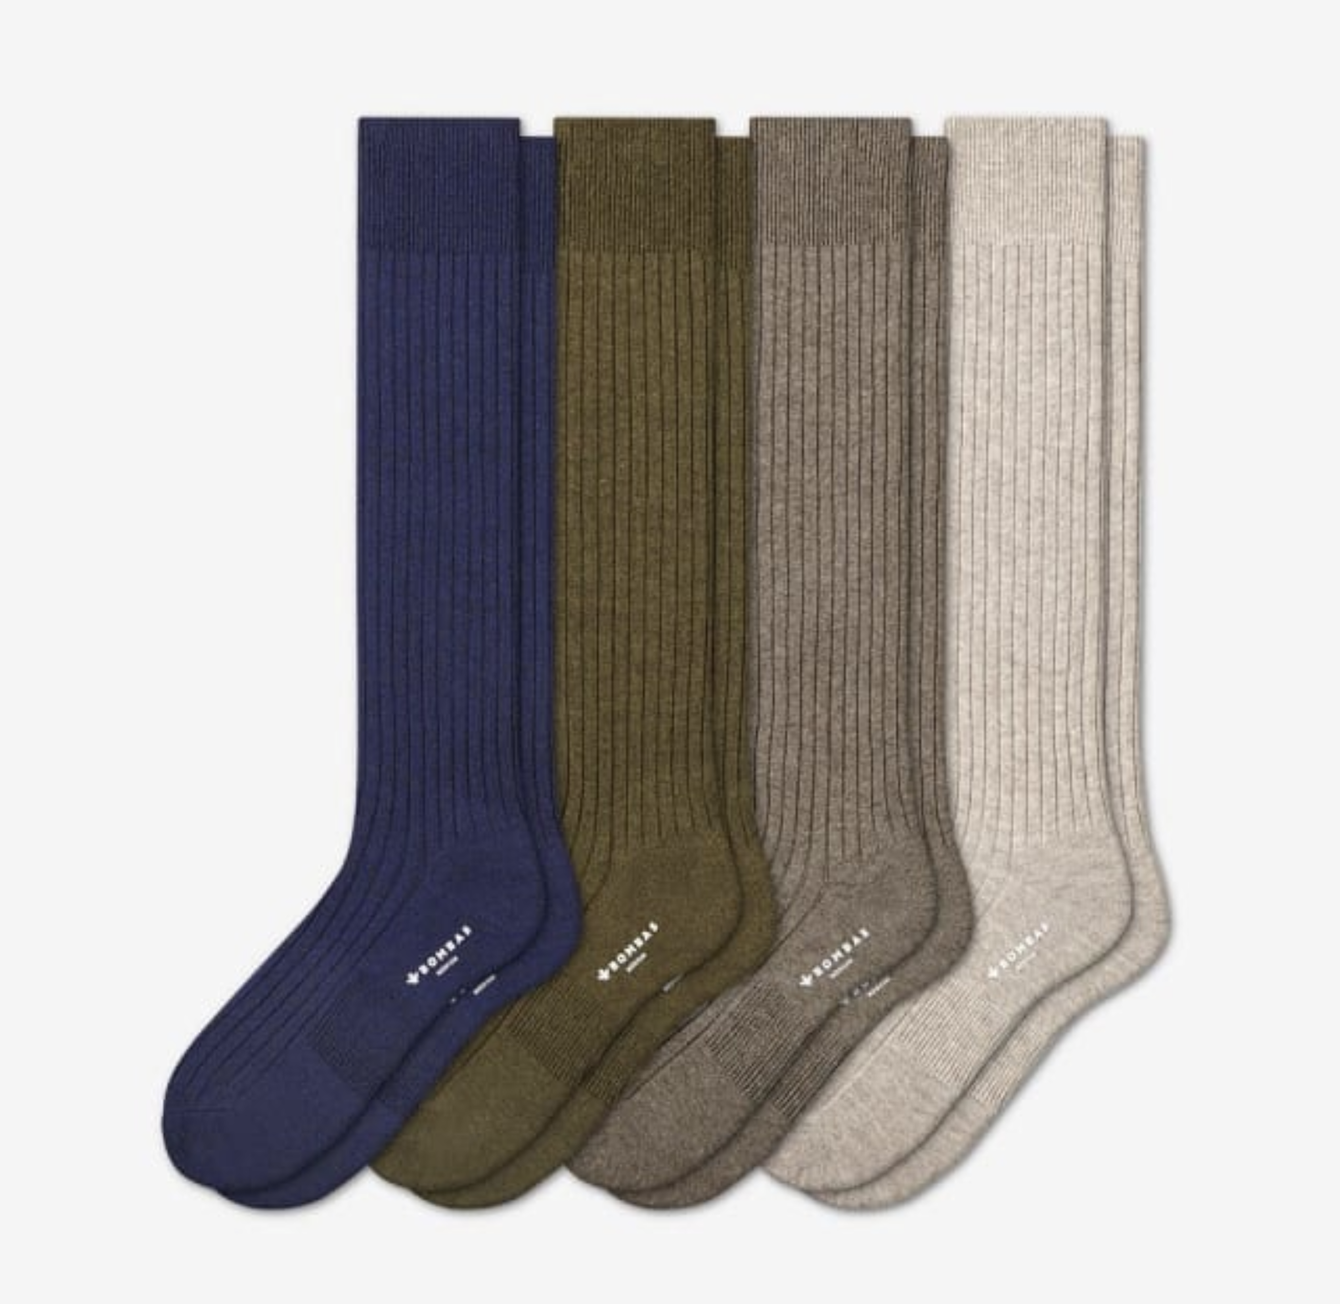 The Best Over-the-Calf Dress Socks for 